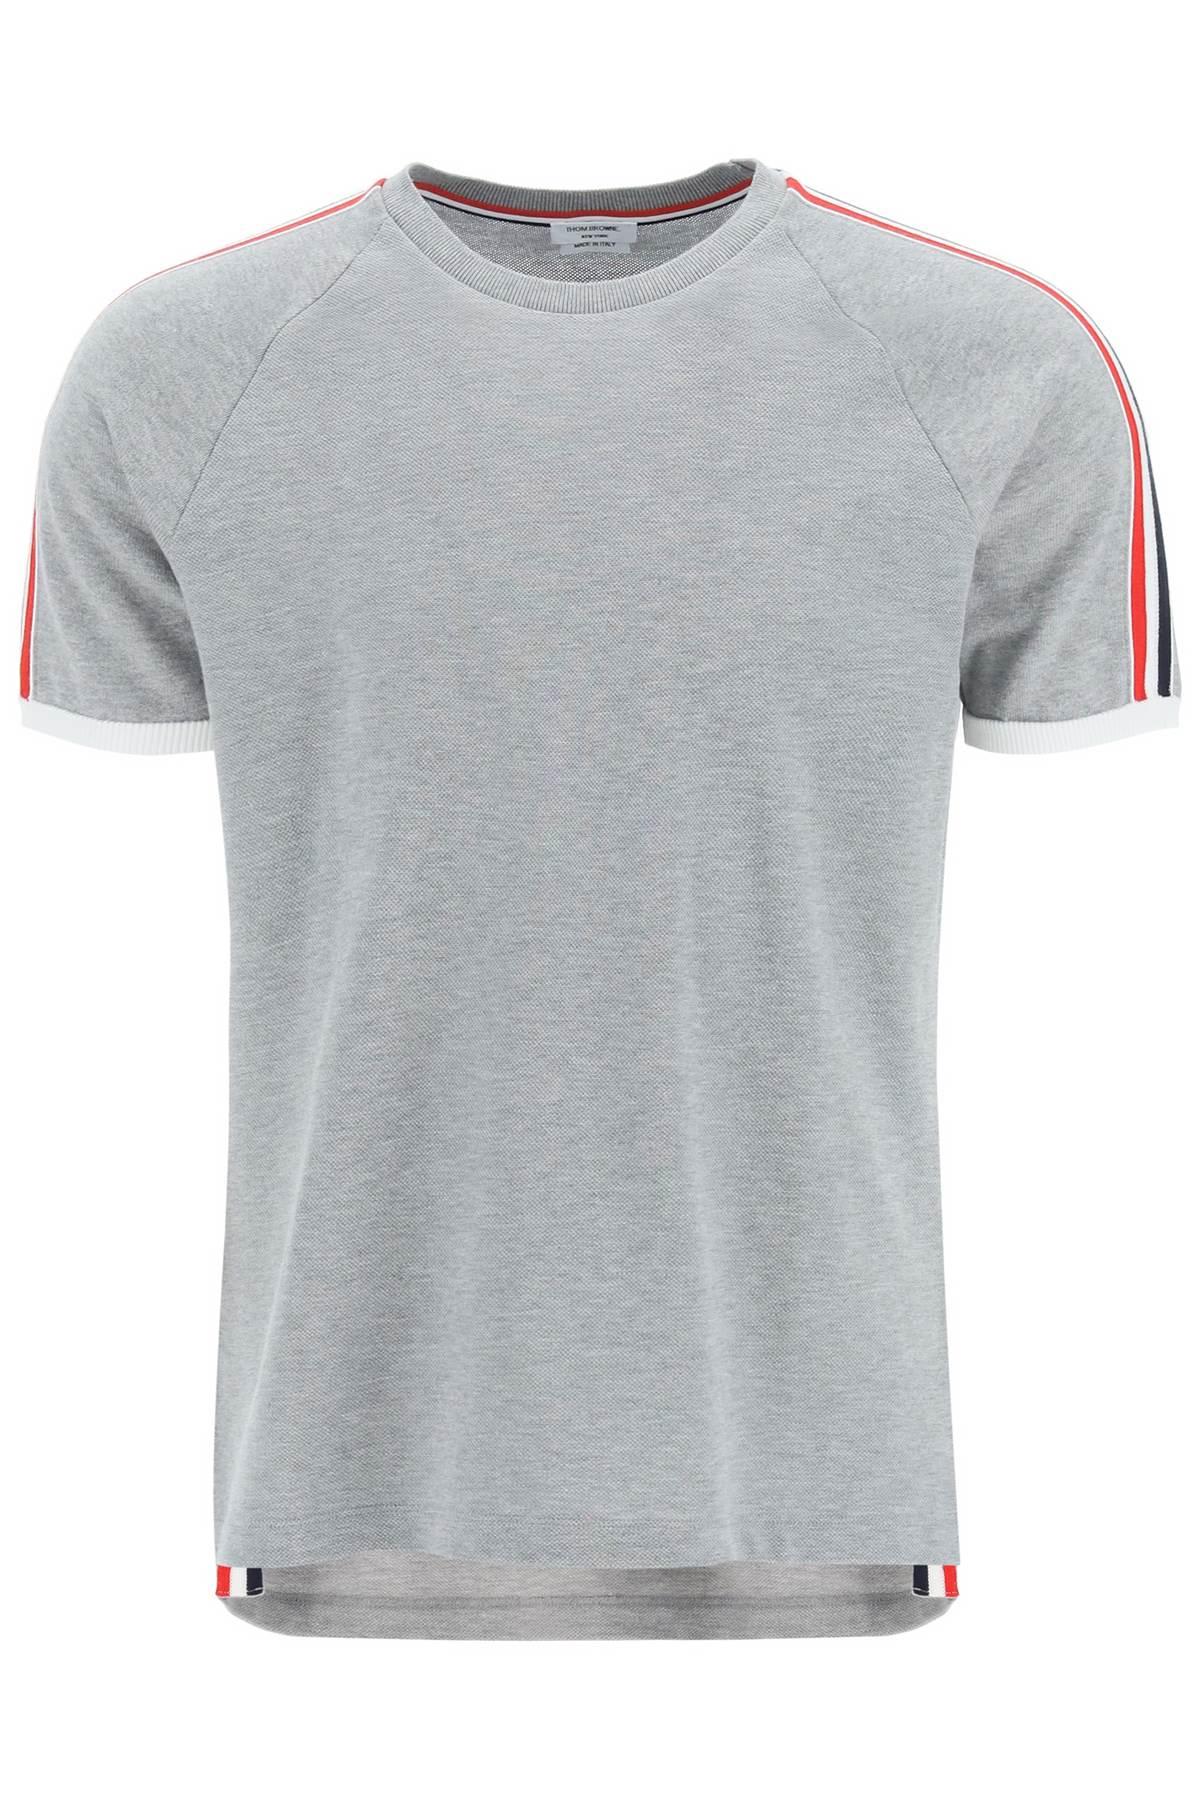 Thom Browne Stripe Detailed Crewneck T-shirt